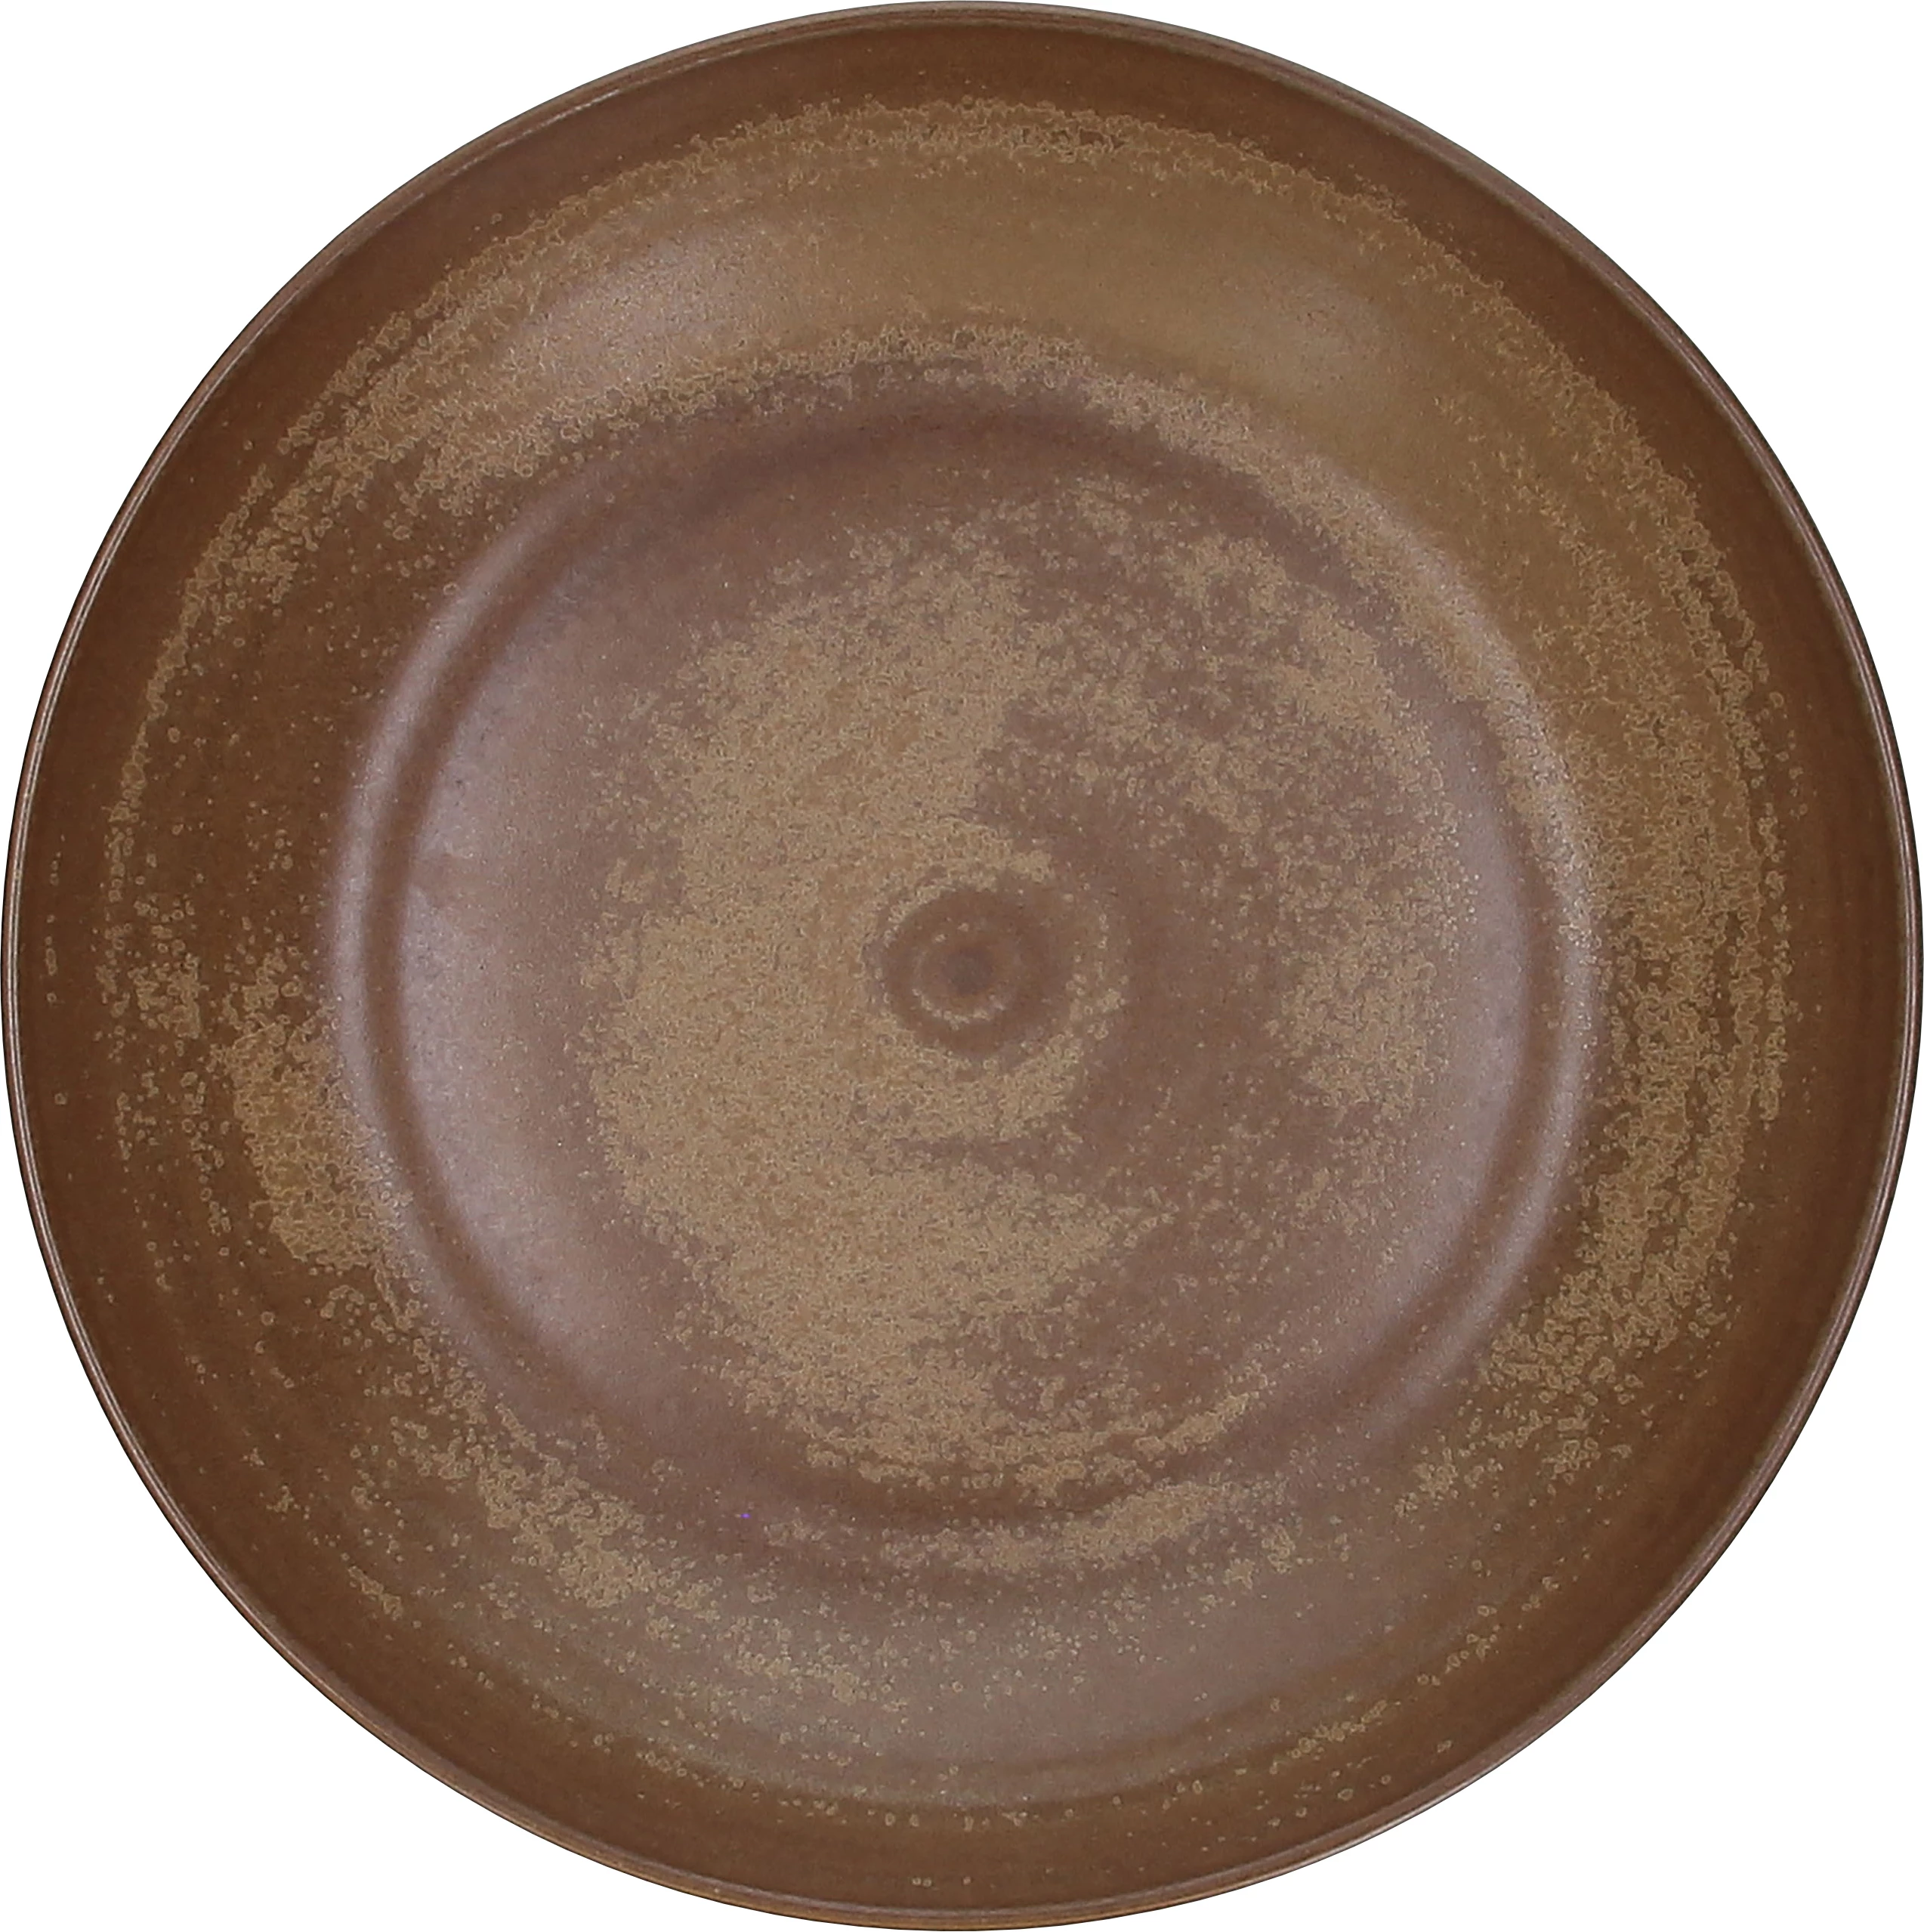 Tognana Terracotta dyb tallerken uden fane, brun, ø25 cm